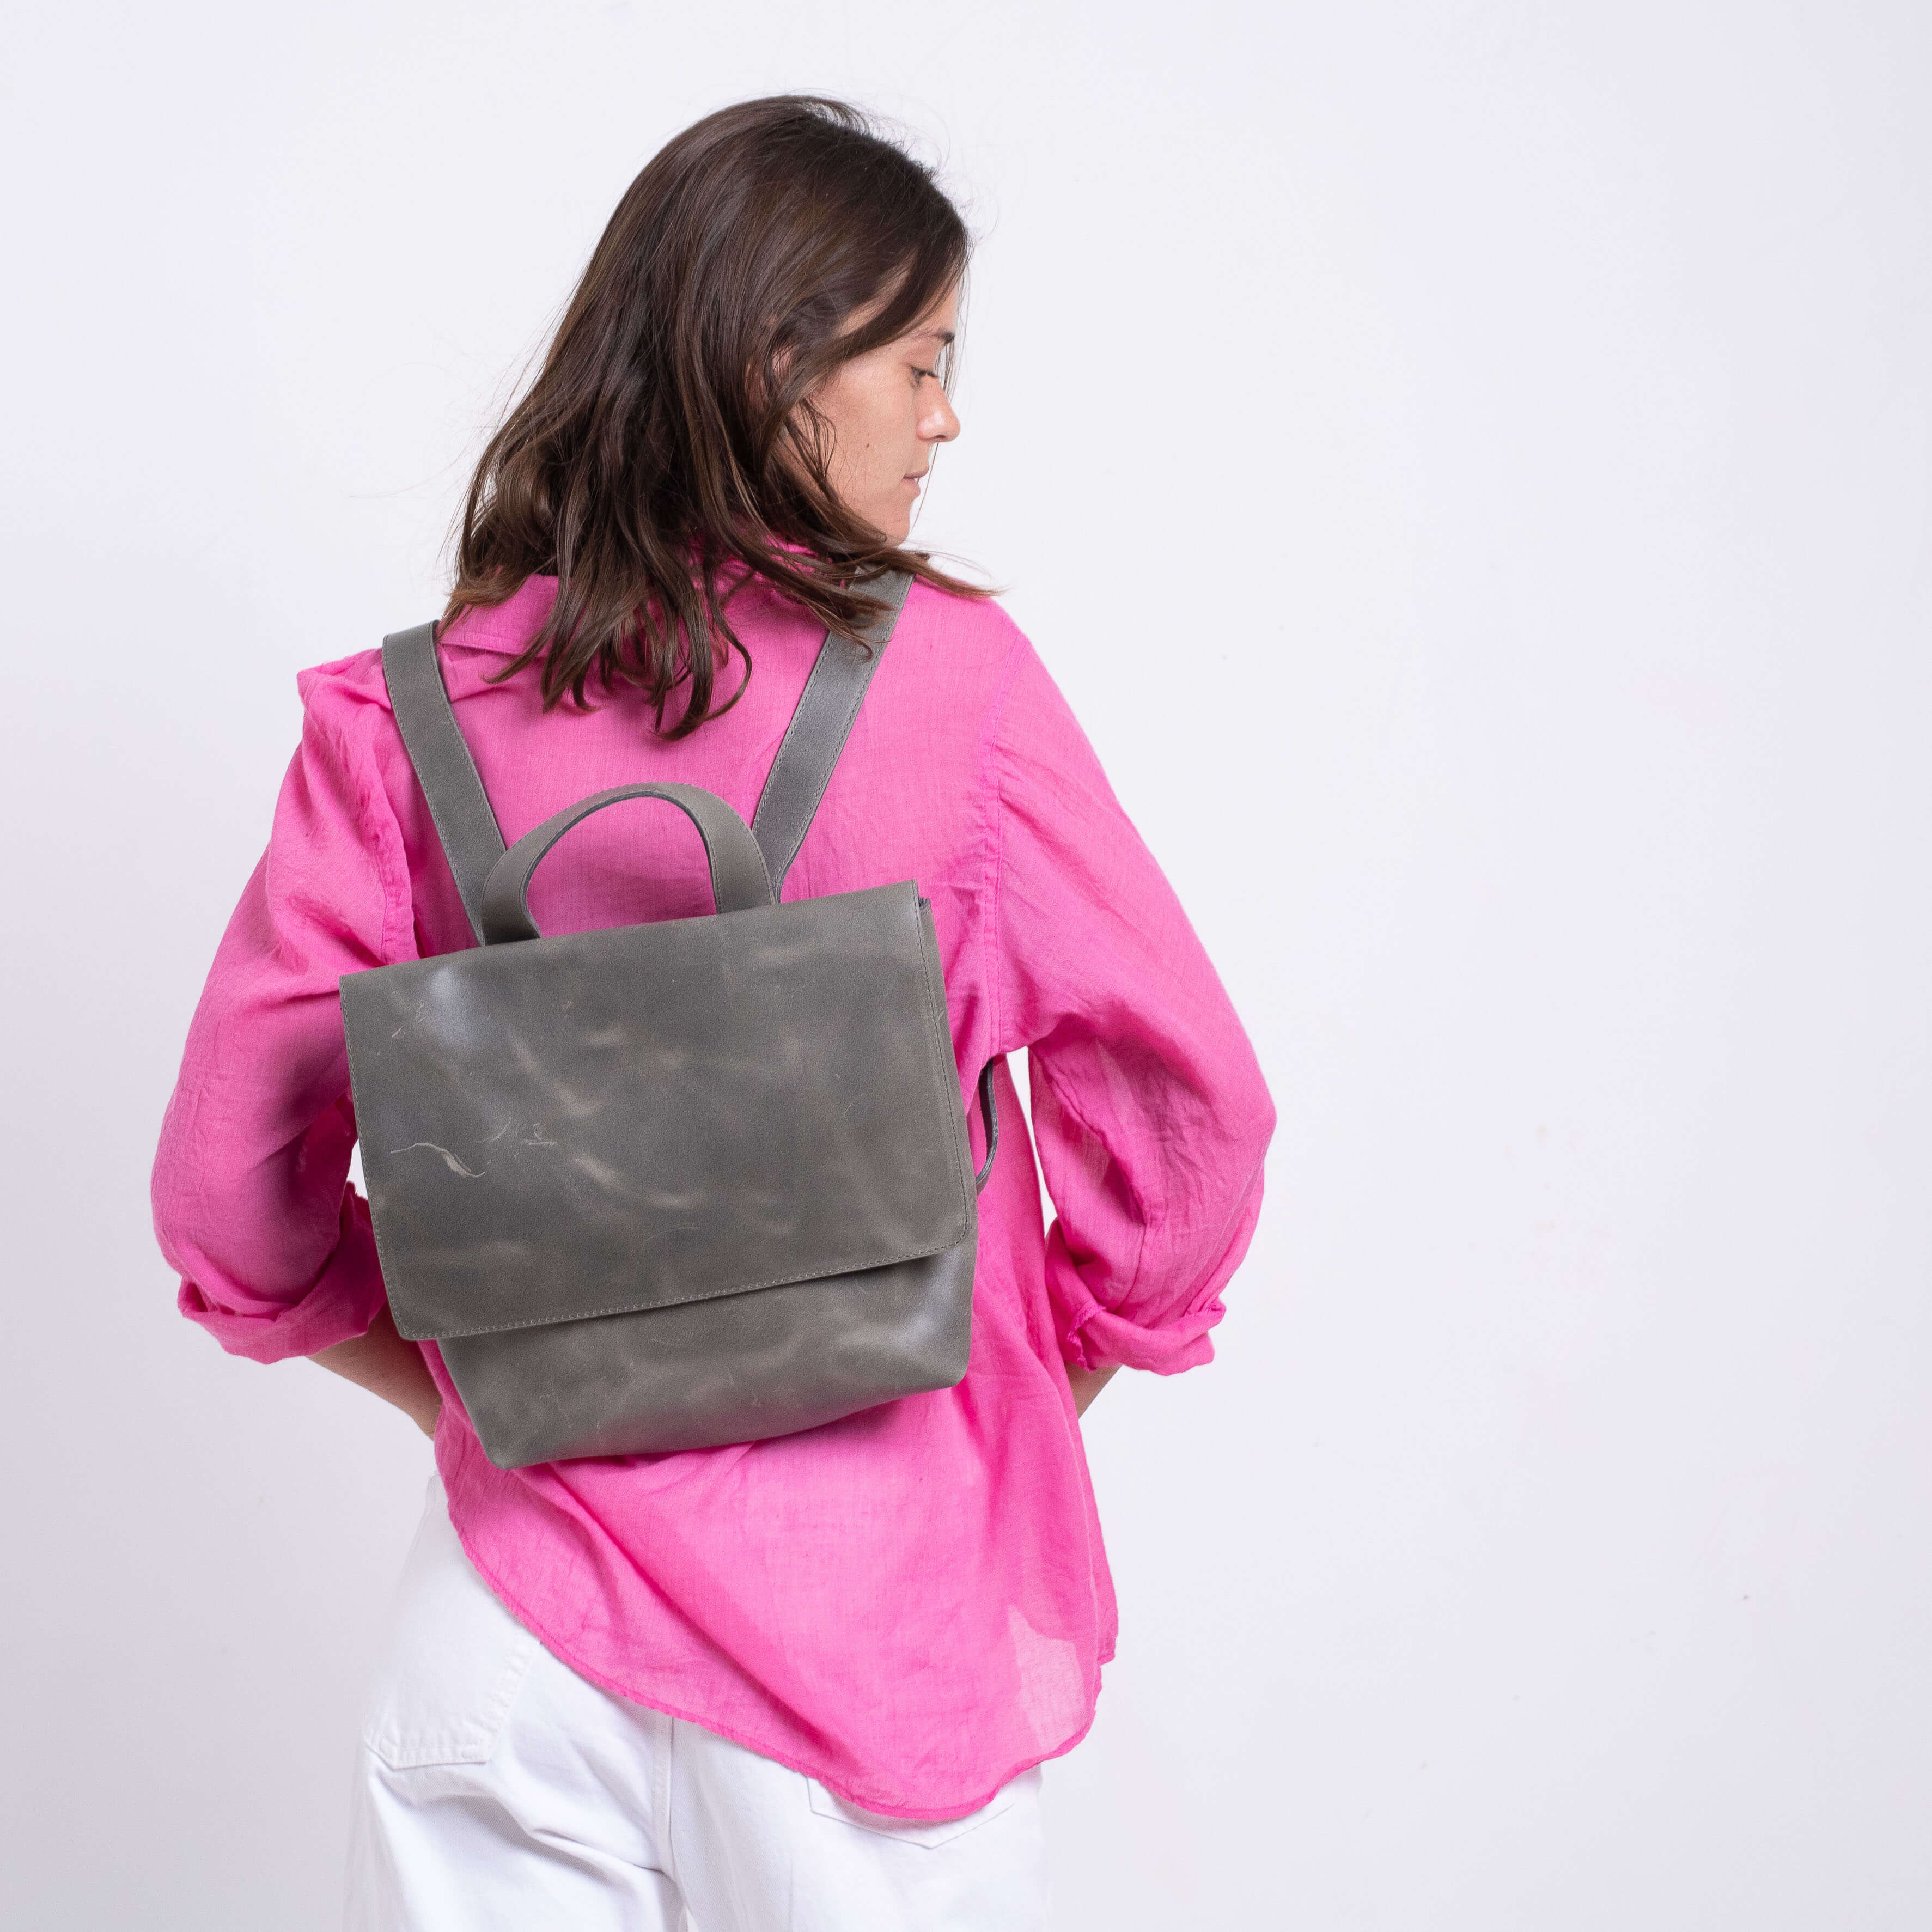 Women's Mini Leather Shoulder Bag